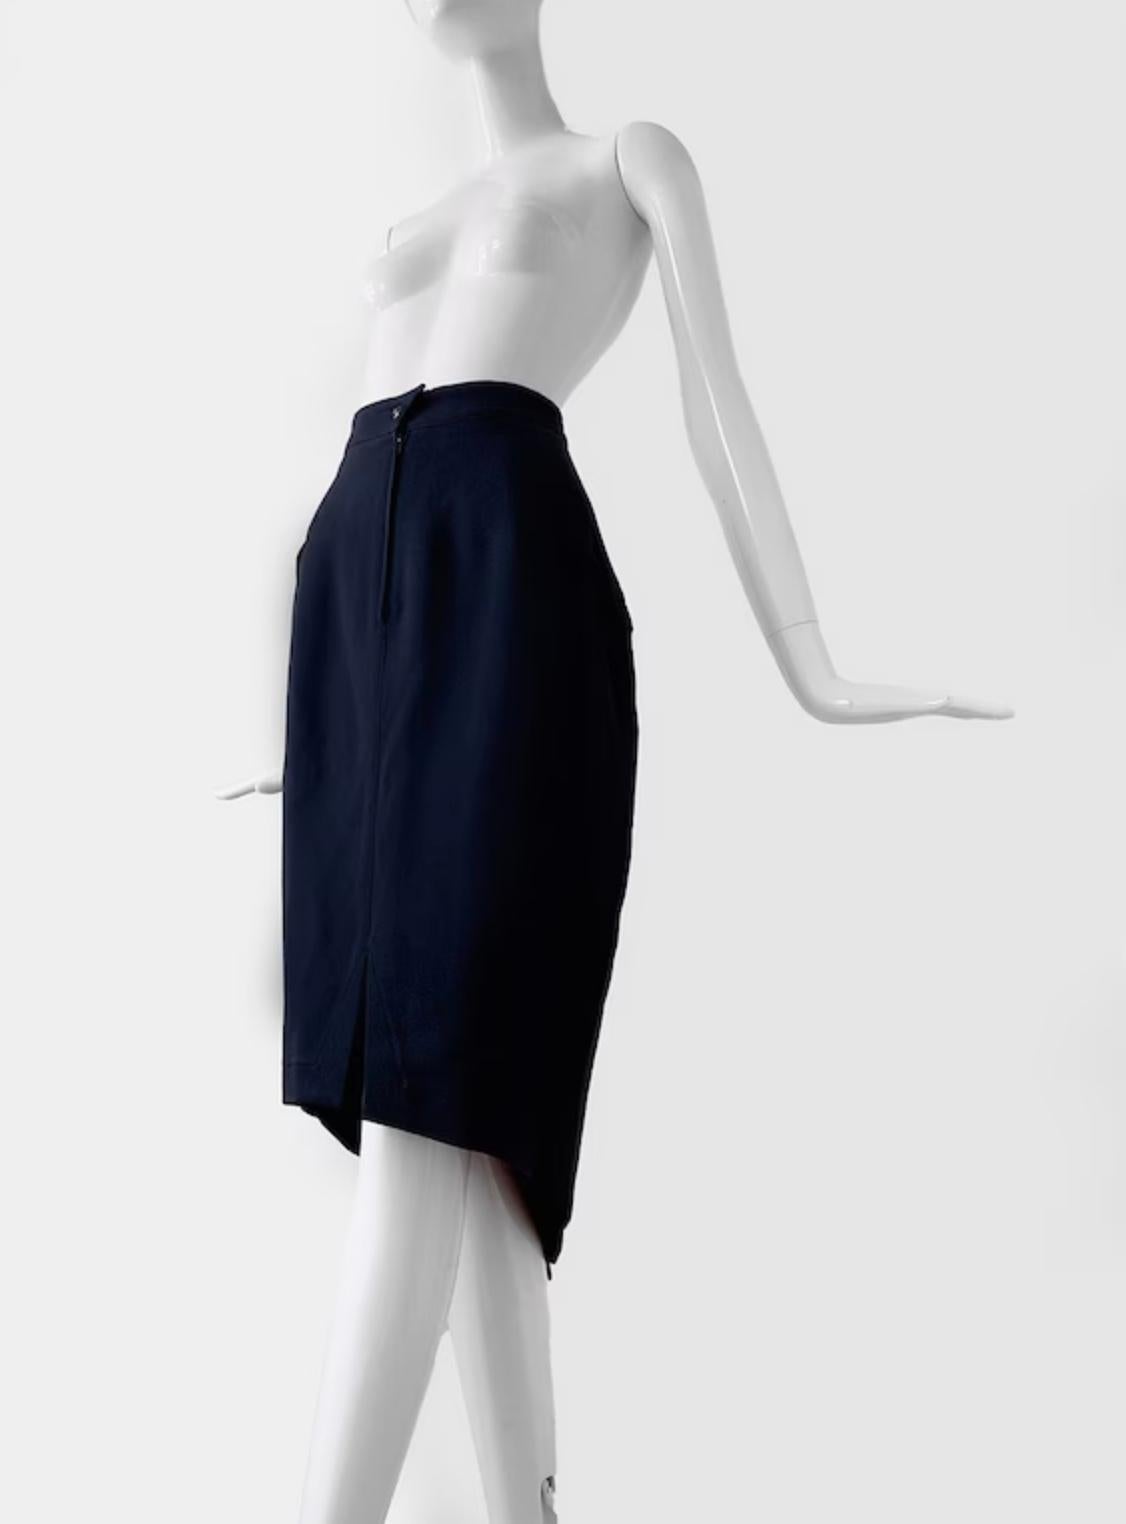 Thierry Mugler Rare Dramatic Suit Skirtsuit Silhouette Wool Blazer Skirt 80s en vente 1